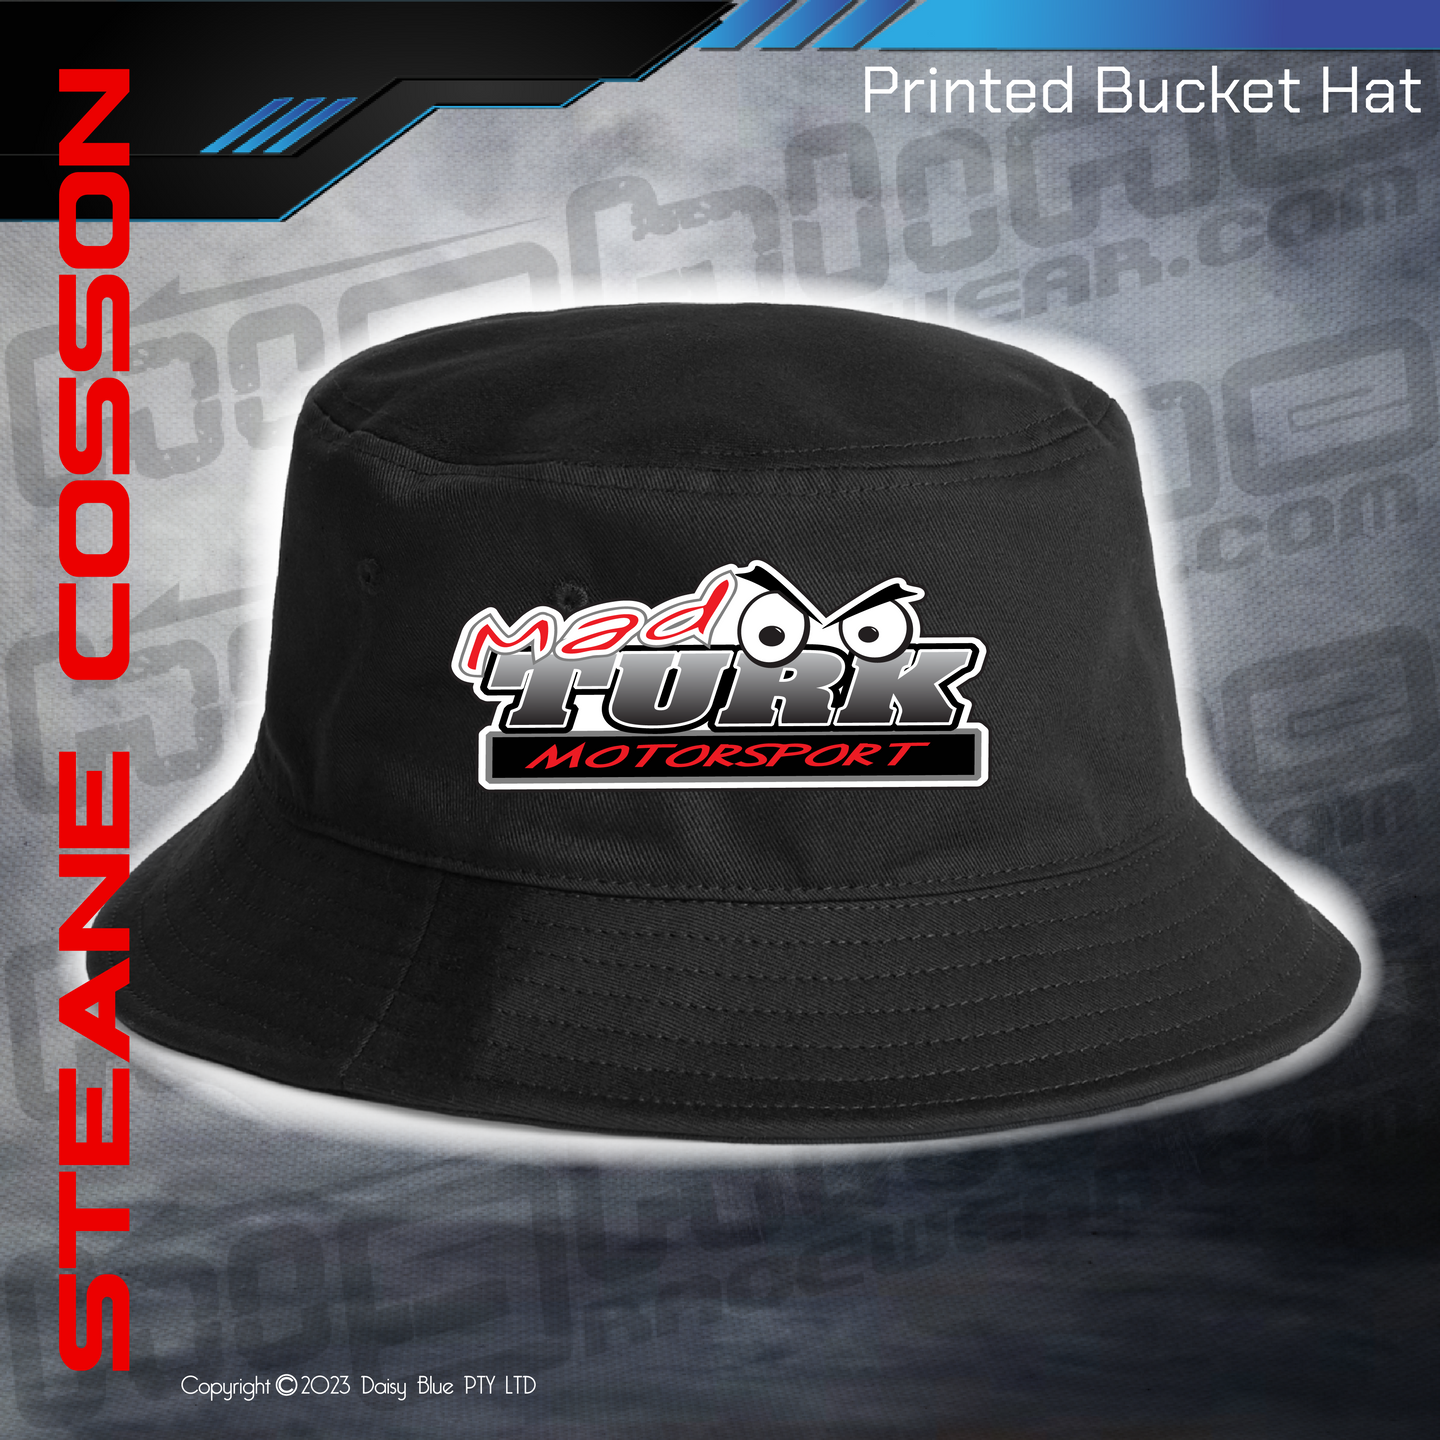 Printed Bucket Hat - Mad Turk Motorsport